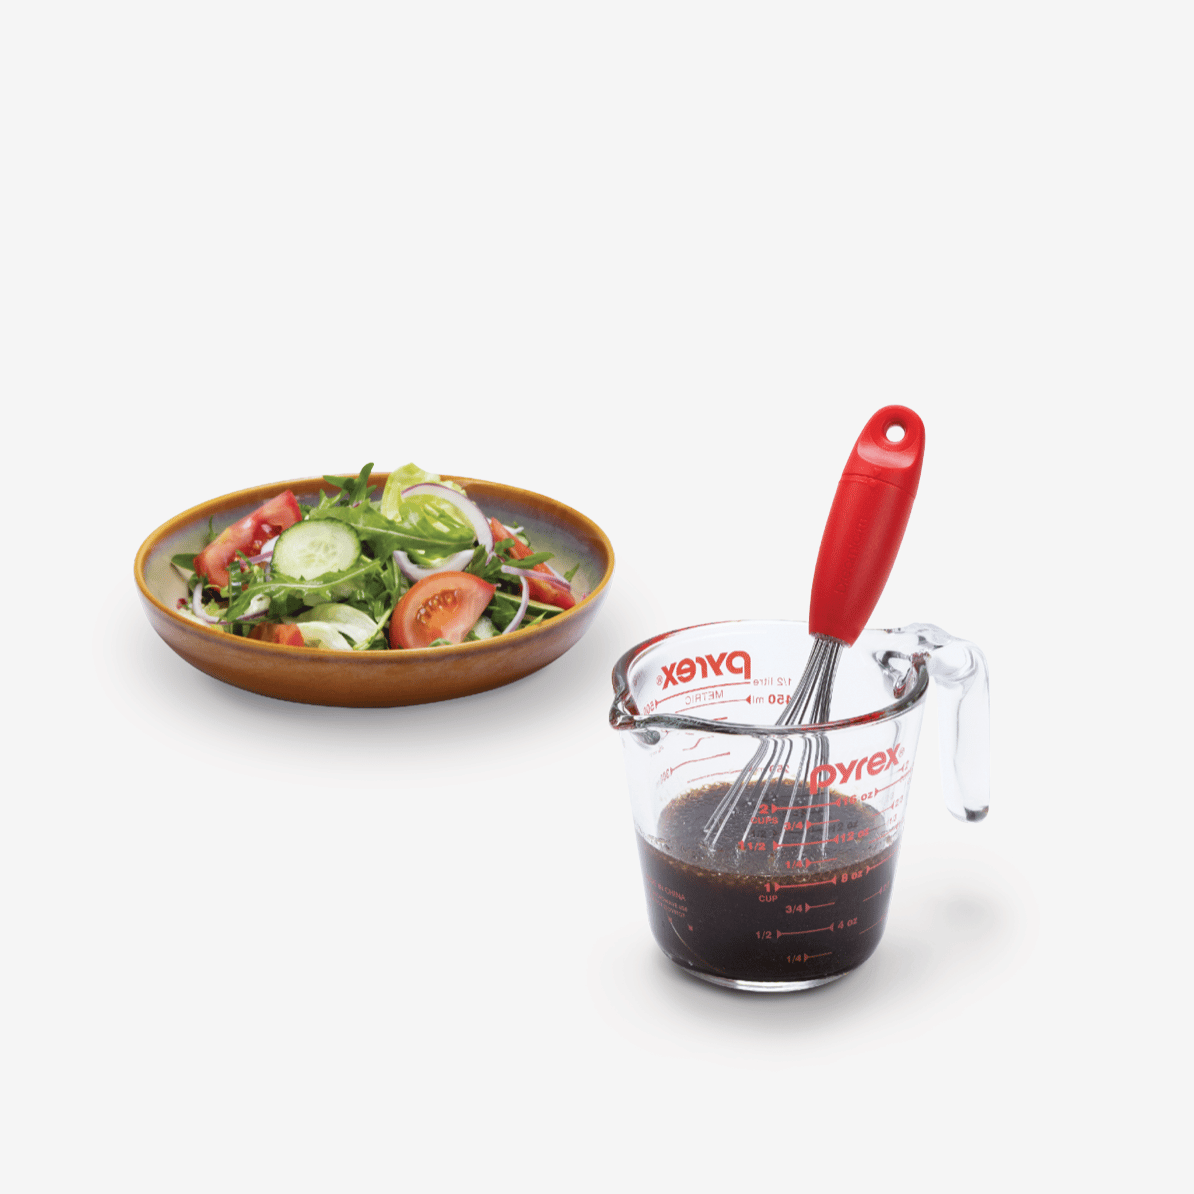 Dreamfarm Mini Flisk, Adjustable Whisk - Spoons N Spice